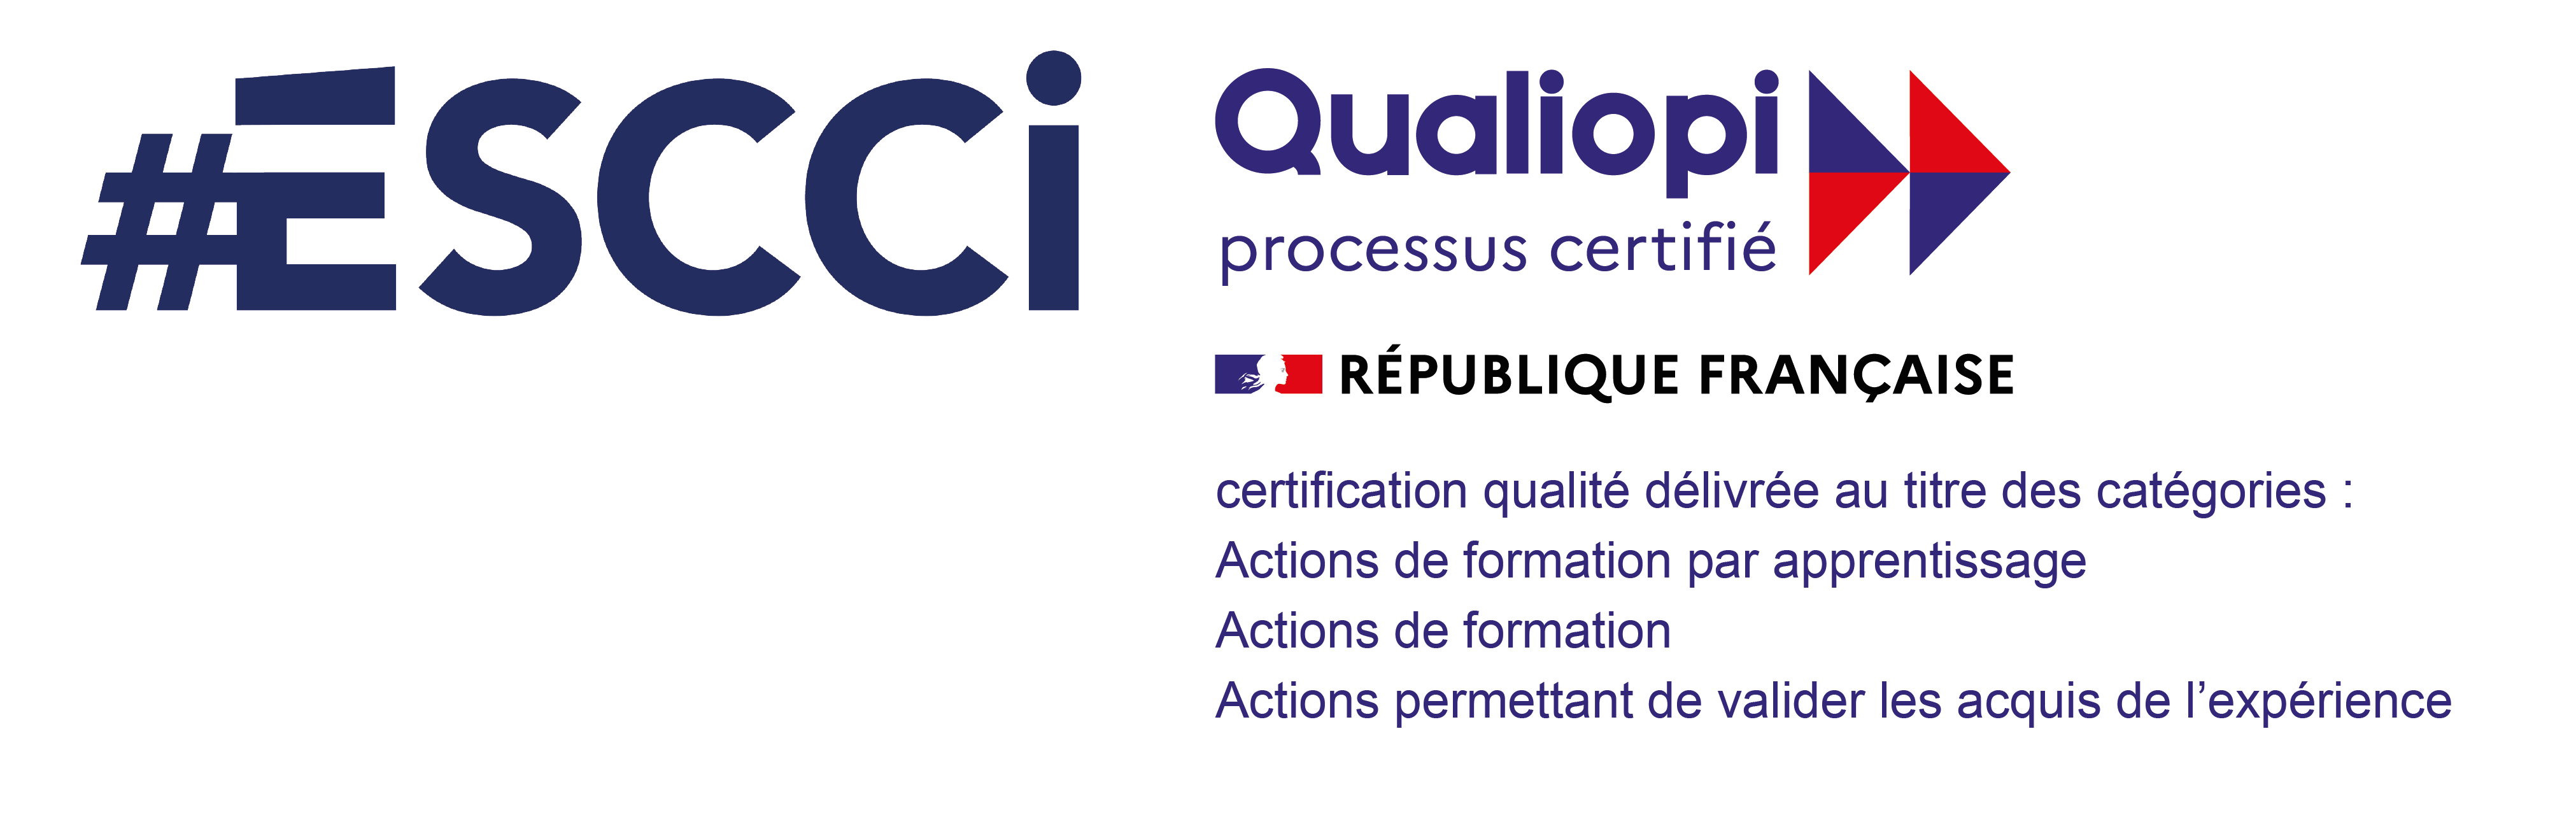 Logo ESCCI avec la certification Qualiopi